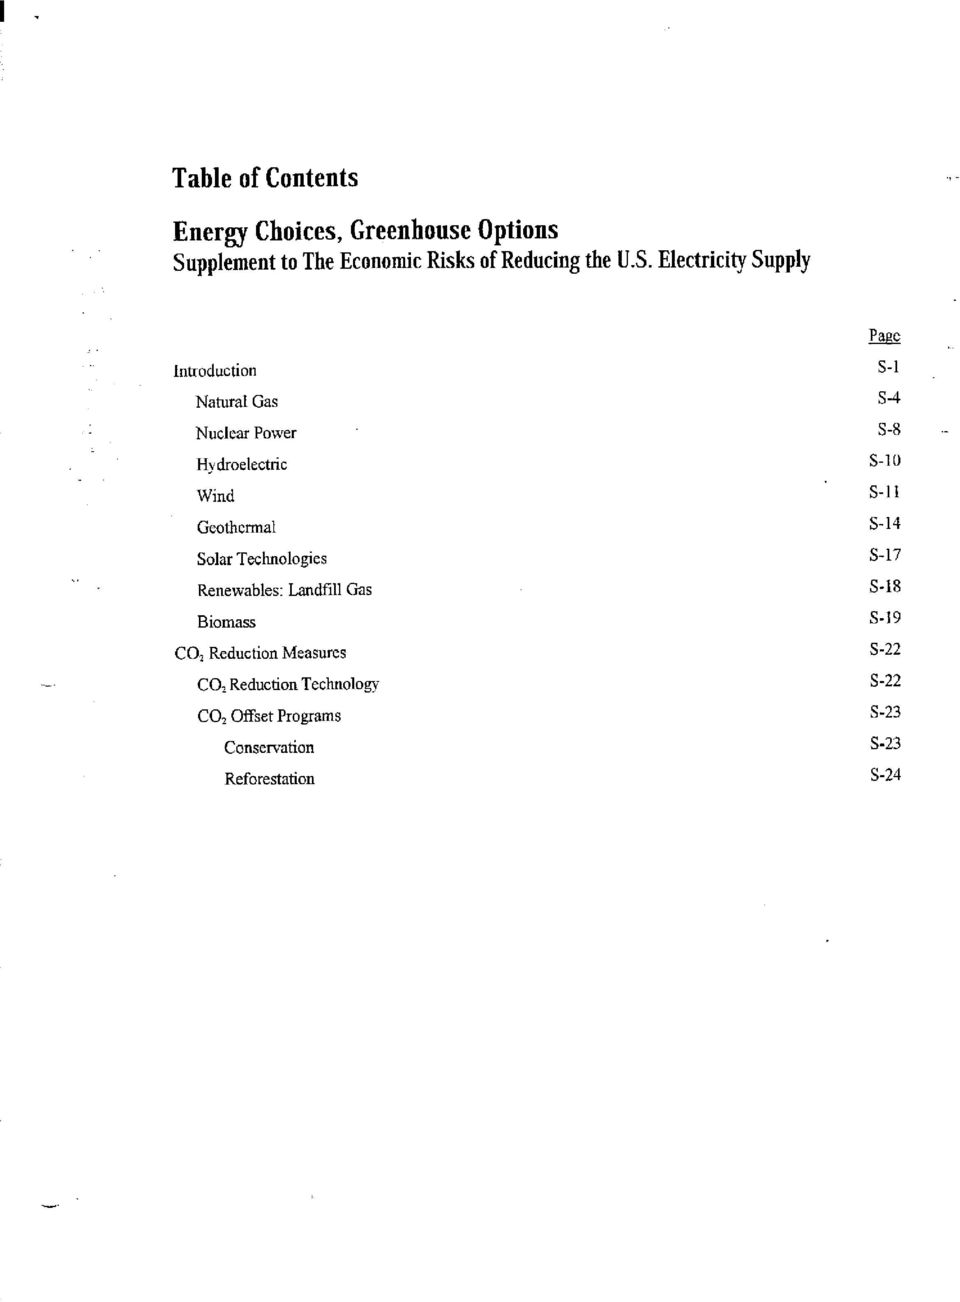 Technoogies Renewabes: La&i Gas Biomass CO, Reduction Measures CO, Reduction Technoogy co, offset